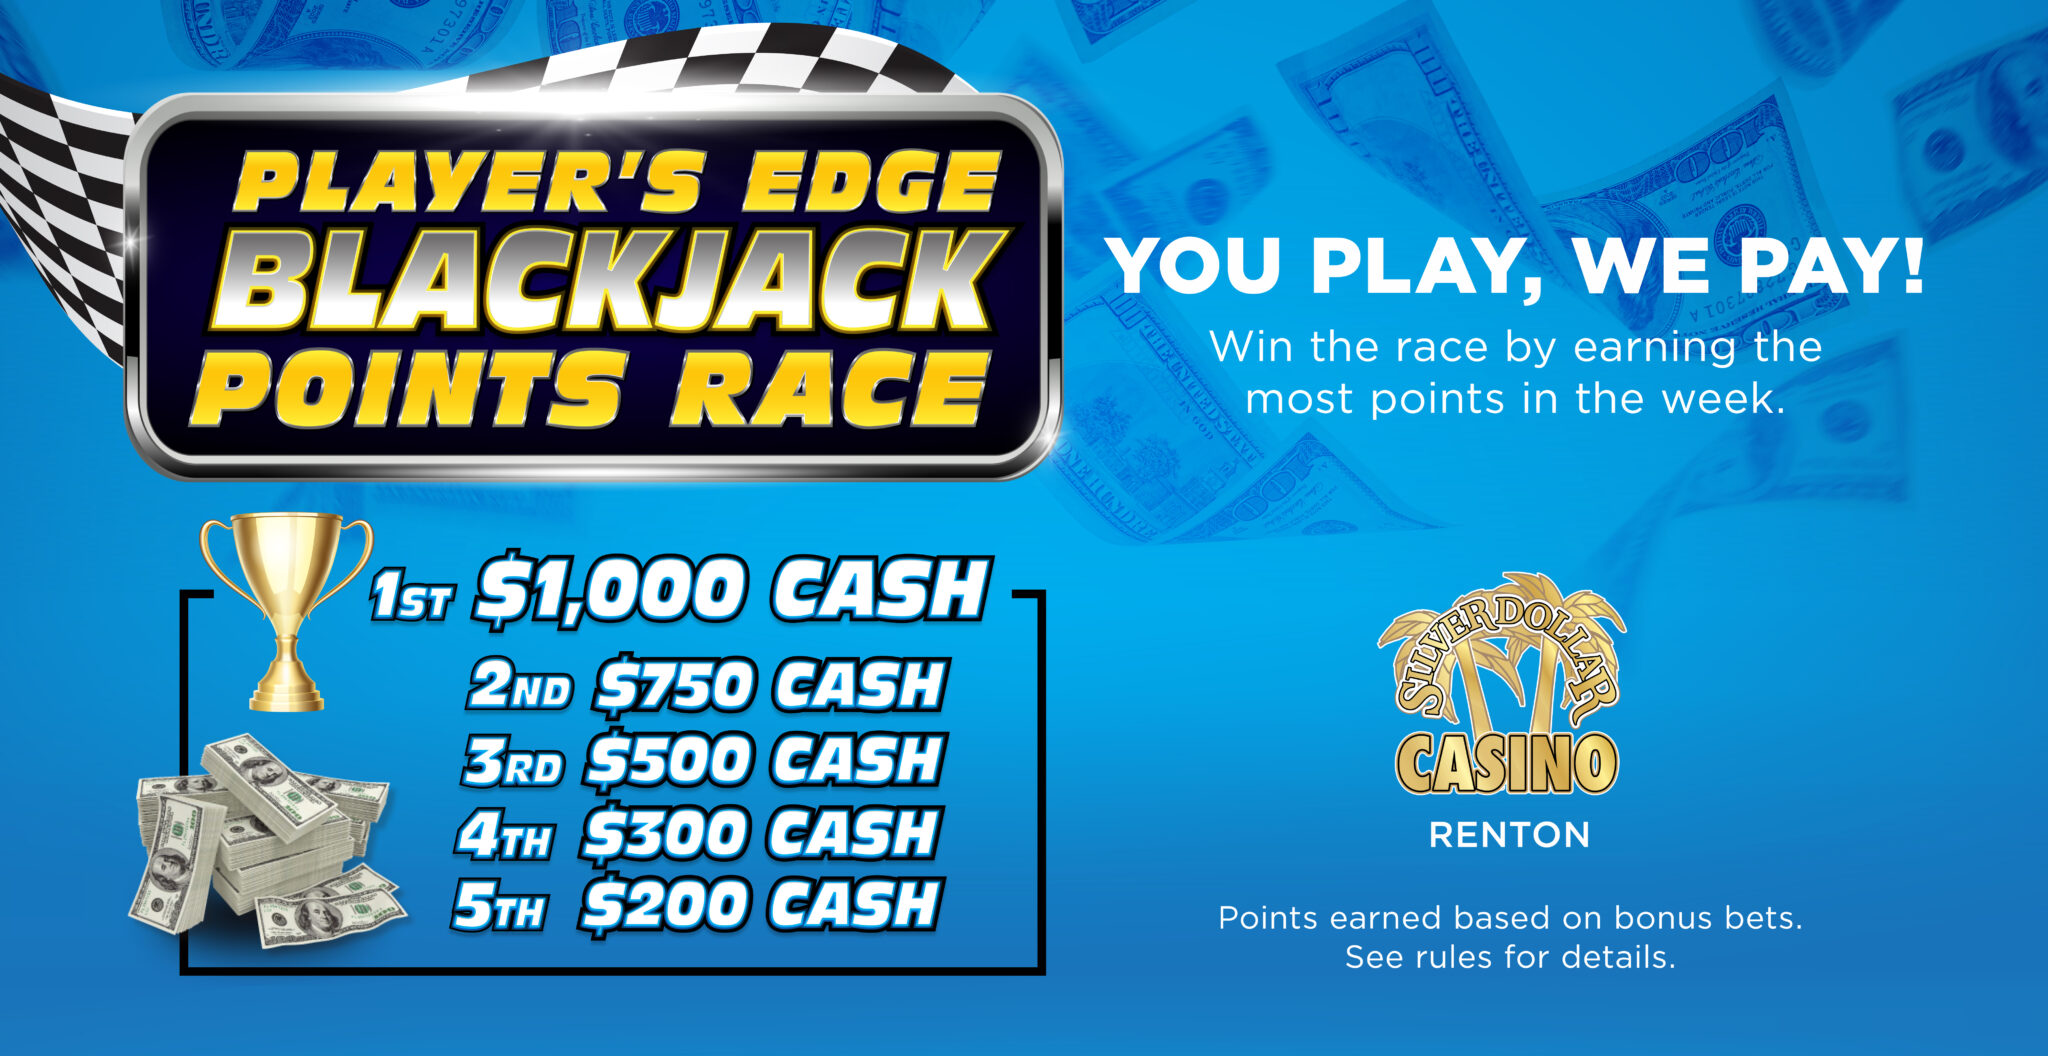 Silver Dollar Casino Renton | Player's Edge Blackjack Points Race